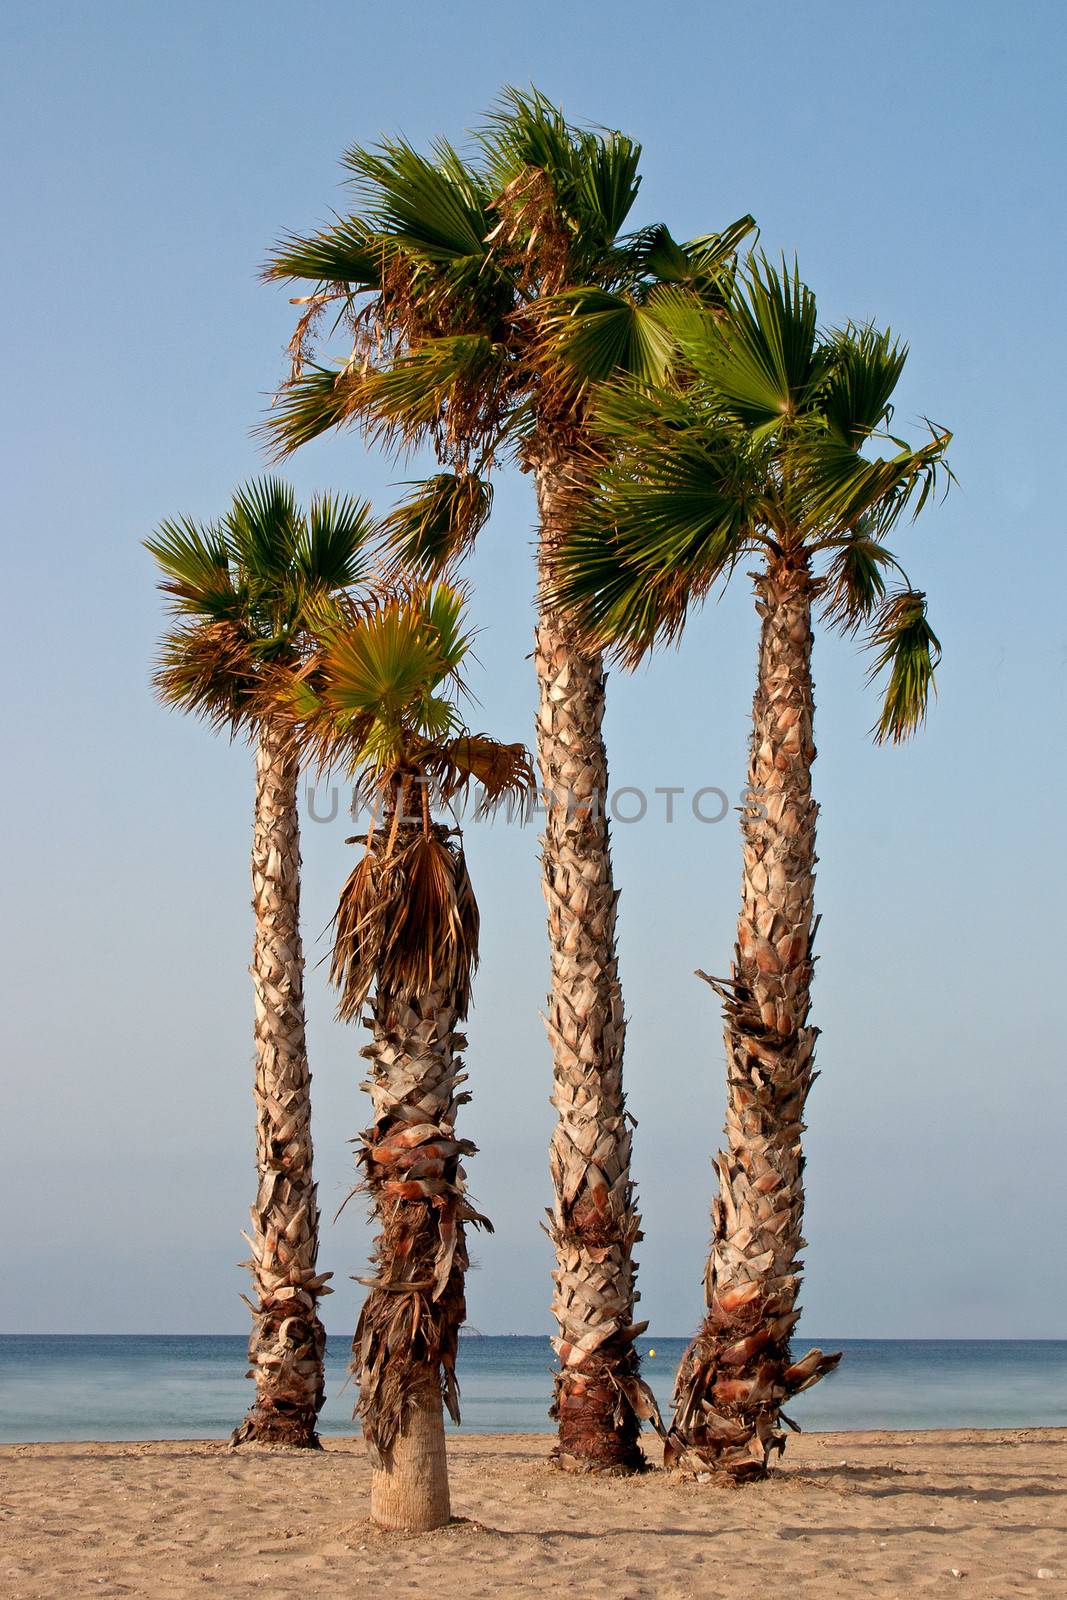 Four Palm Trees at the Spanish Coast